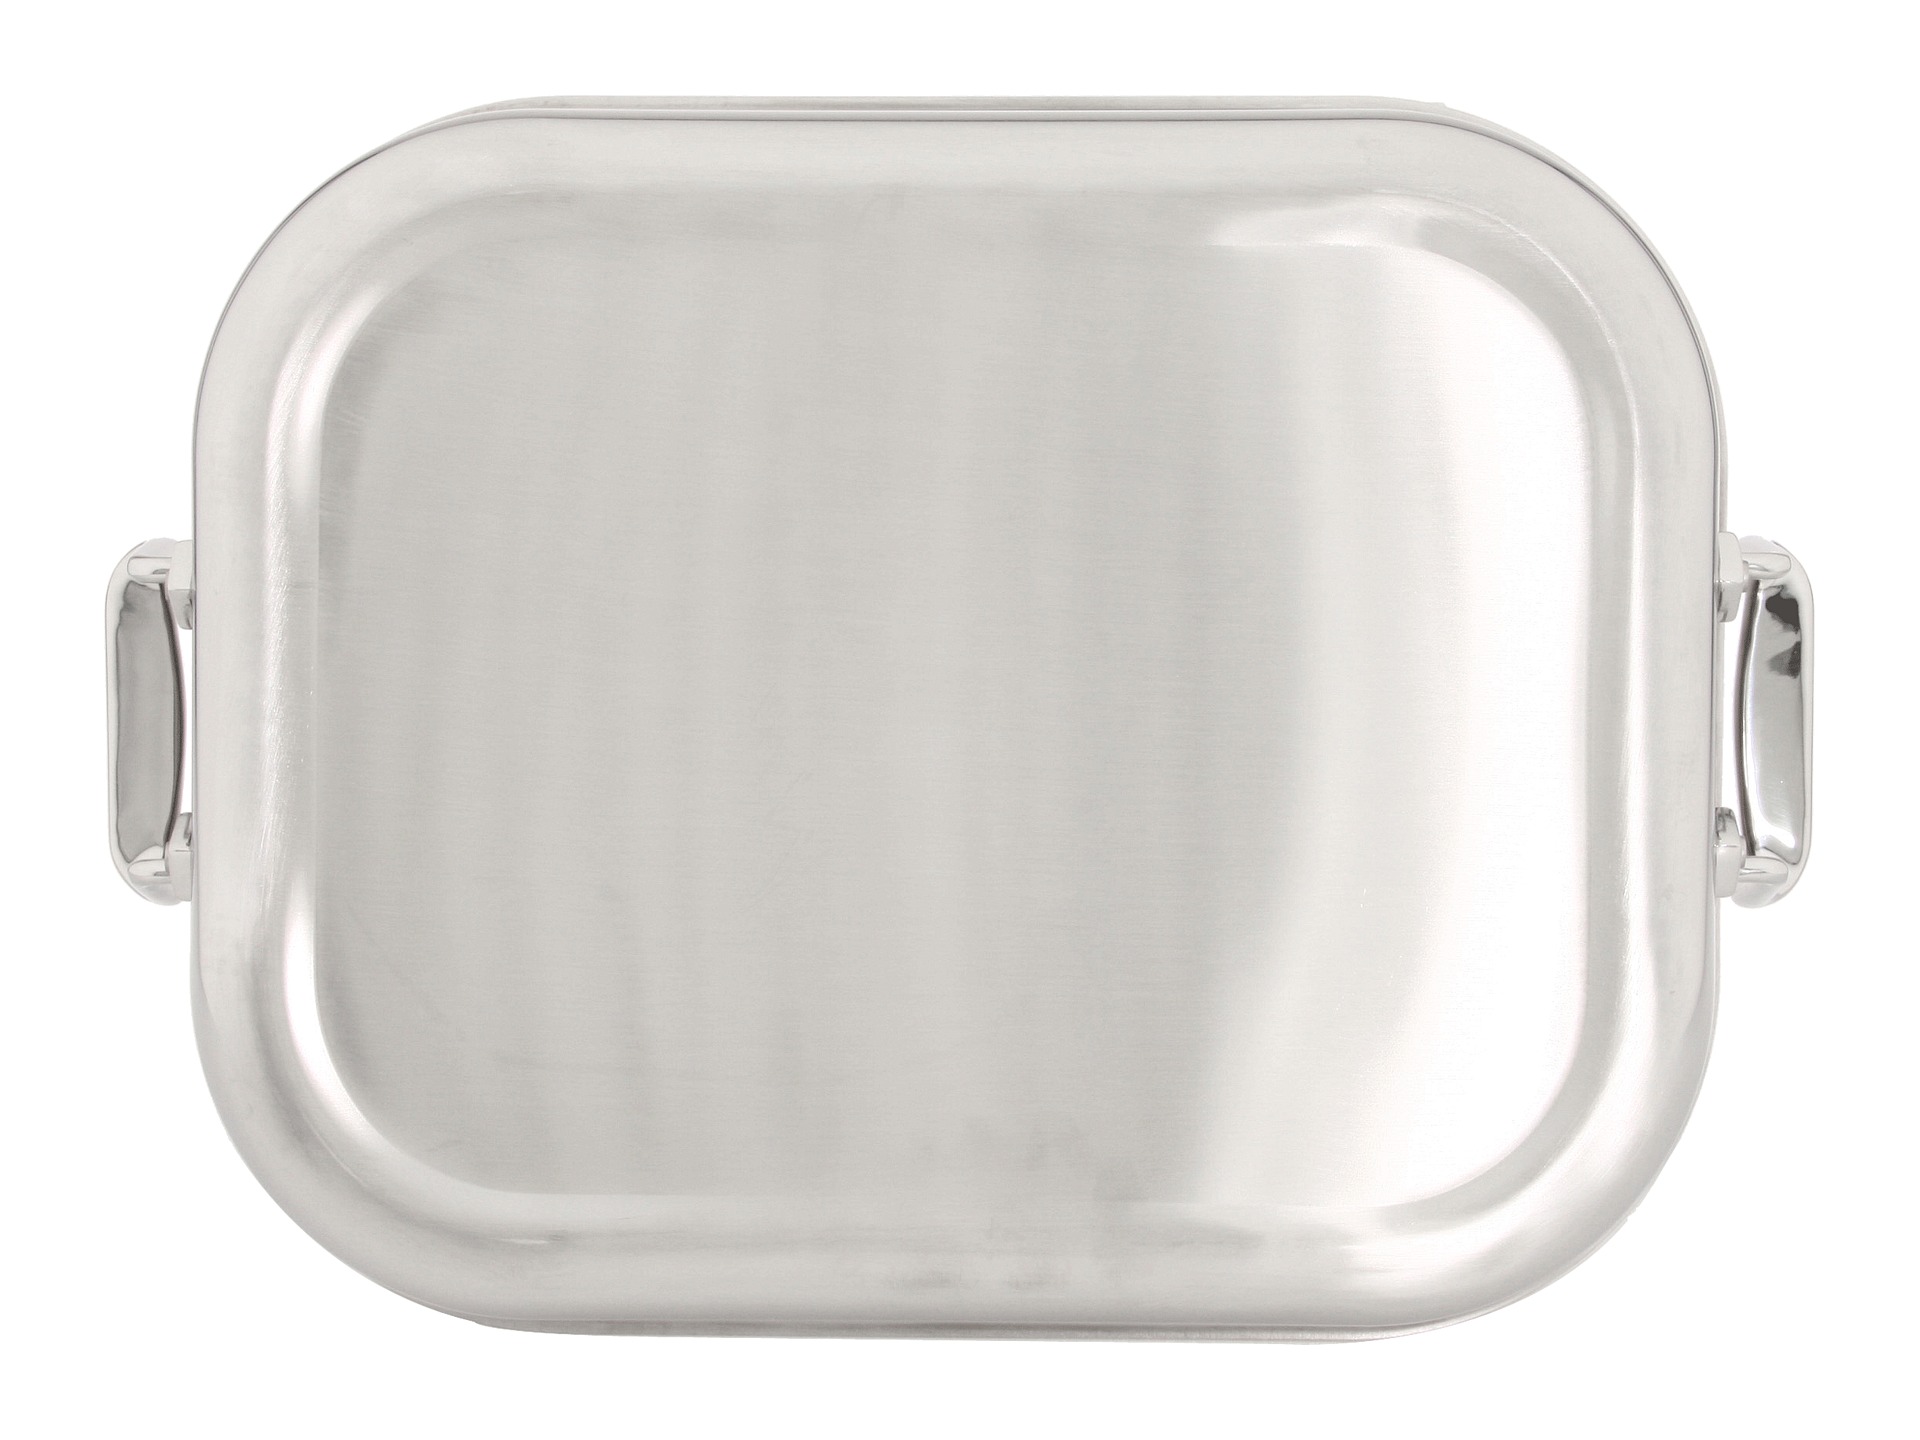 all-clad-lasagna-pan-with-lid-shipped-free-at-zappos